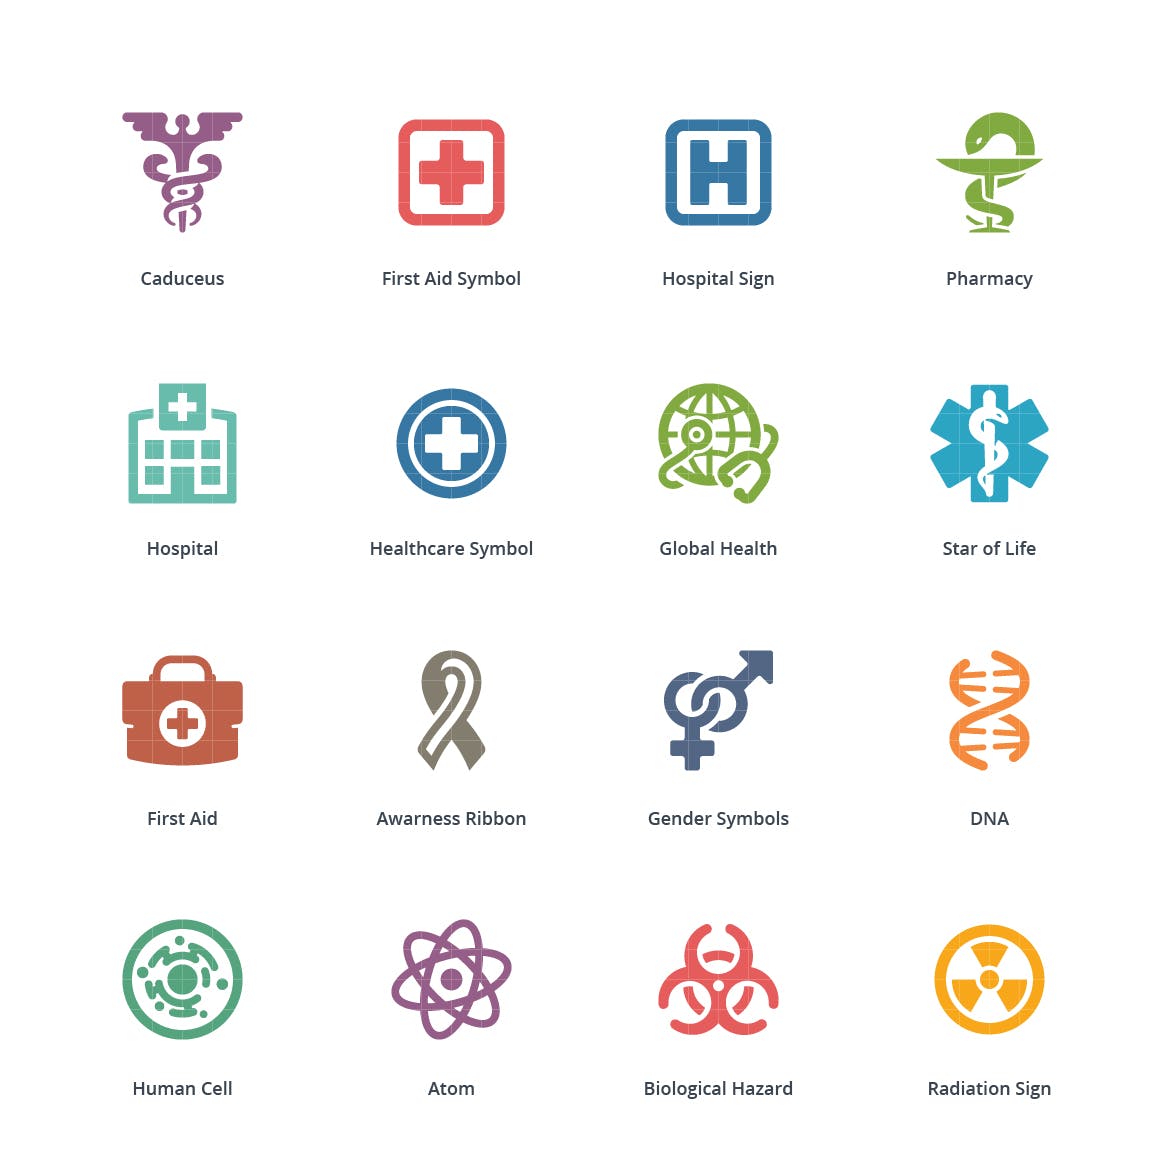 Colored系列-医疗保健主题矢量16设计素材网精选图标集v1 Medical & Health Care Icons Set 1 – Colored Series插图(1)